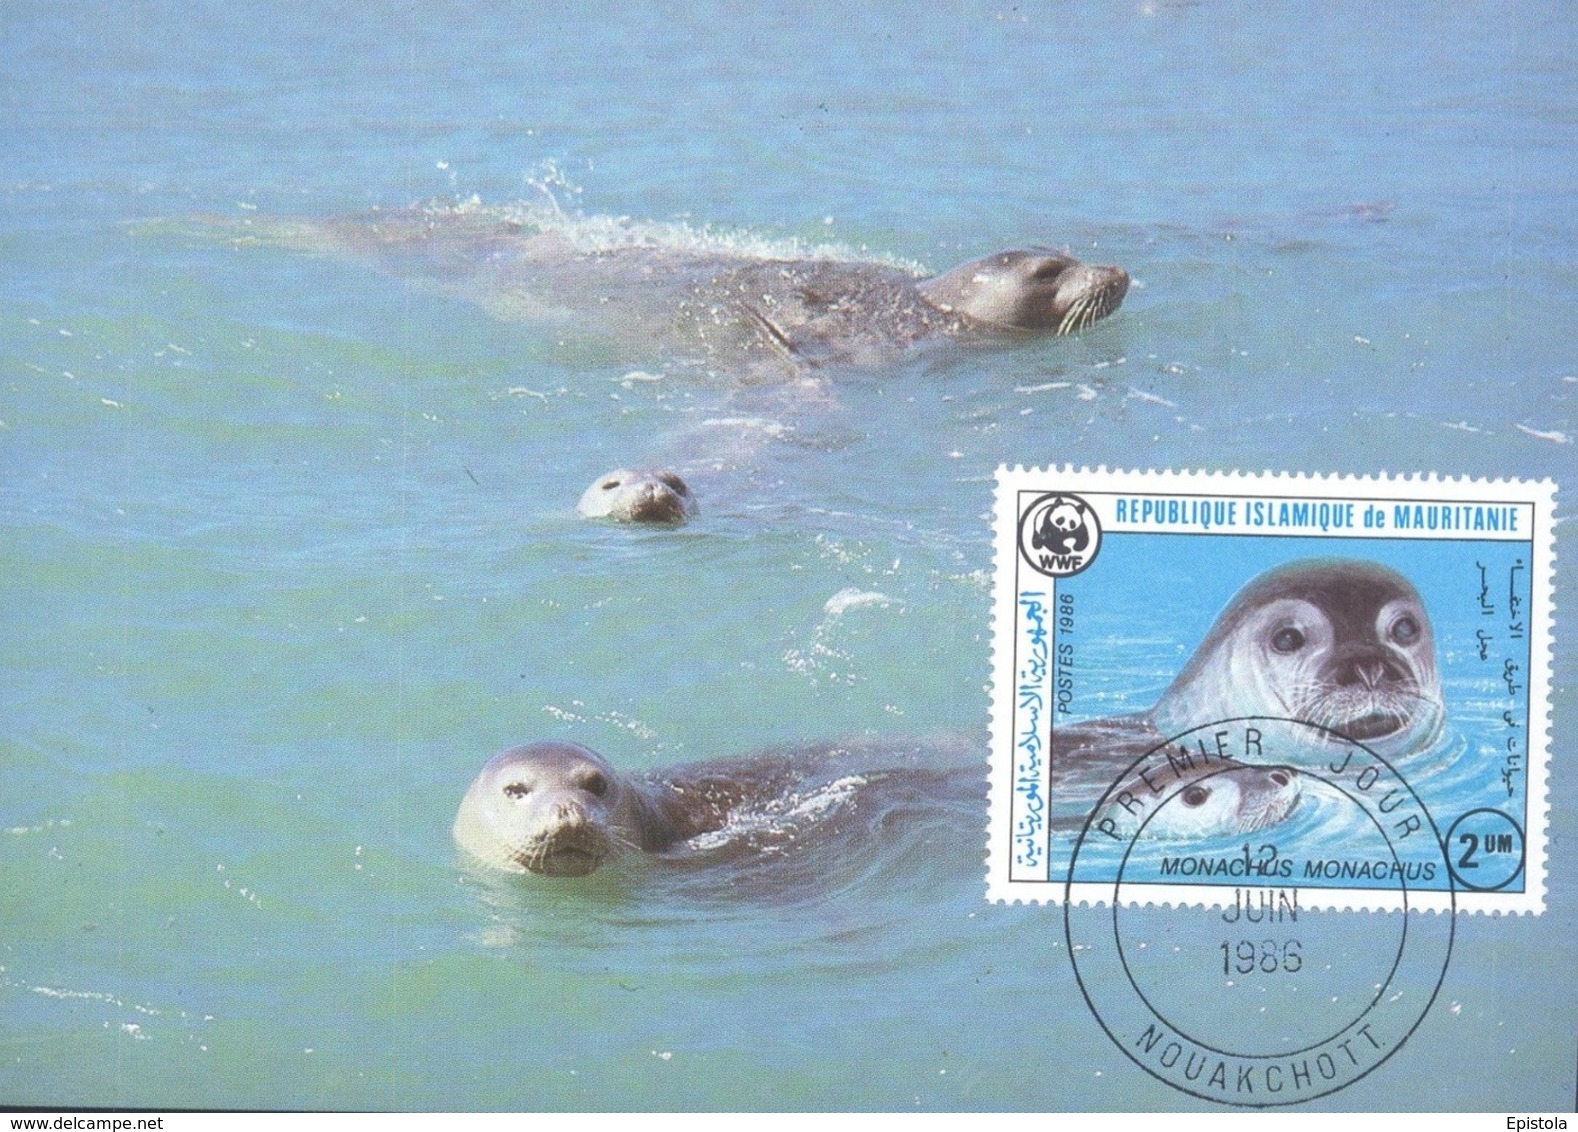 1986 - NOUAKCHOTT - Monk Seal - Moine Otarie Maximum Card - Mediterranean Monk Seal - WWF - First Day 12 JUIN 1986 - Mauritanie